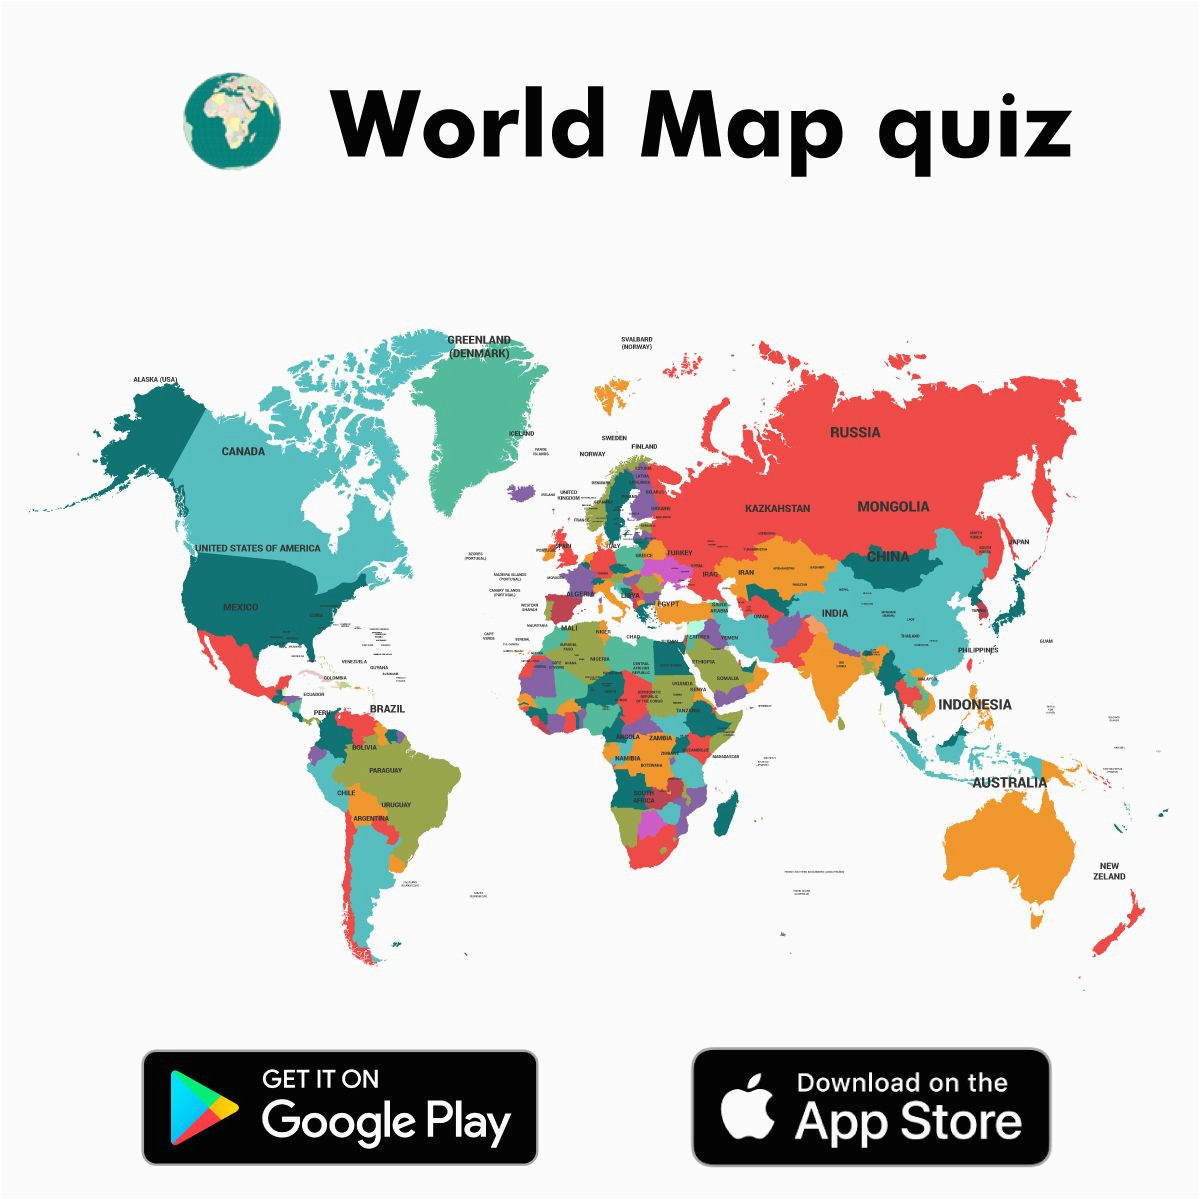 world map quiz app is an interesting app developed for kids